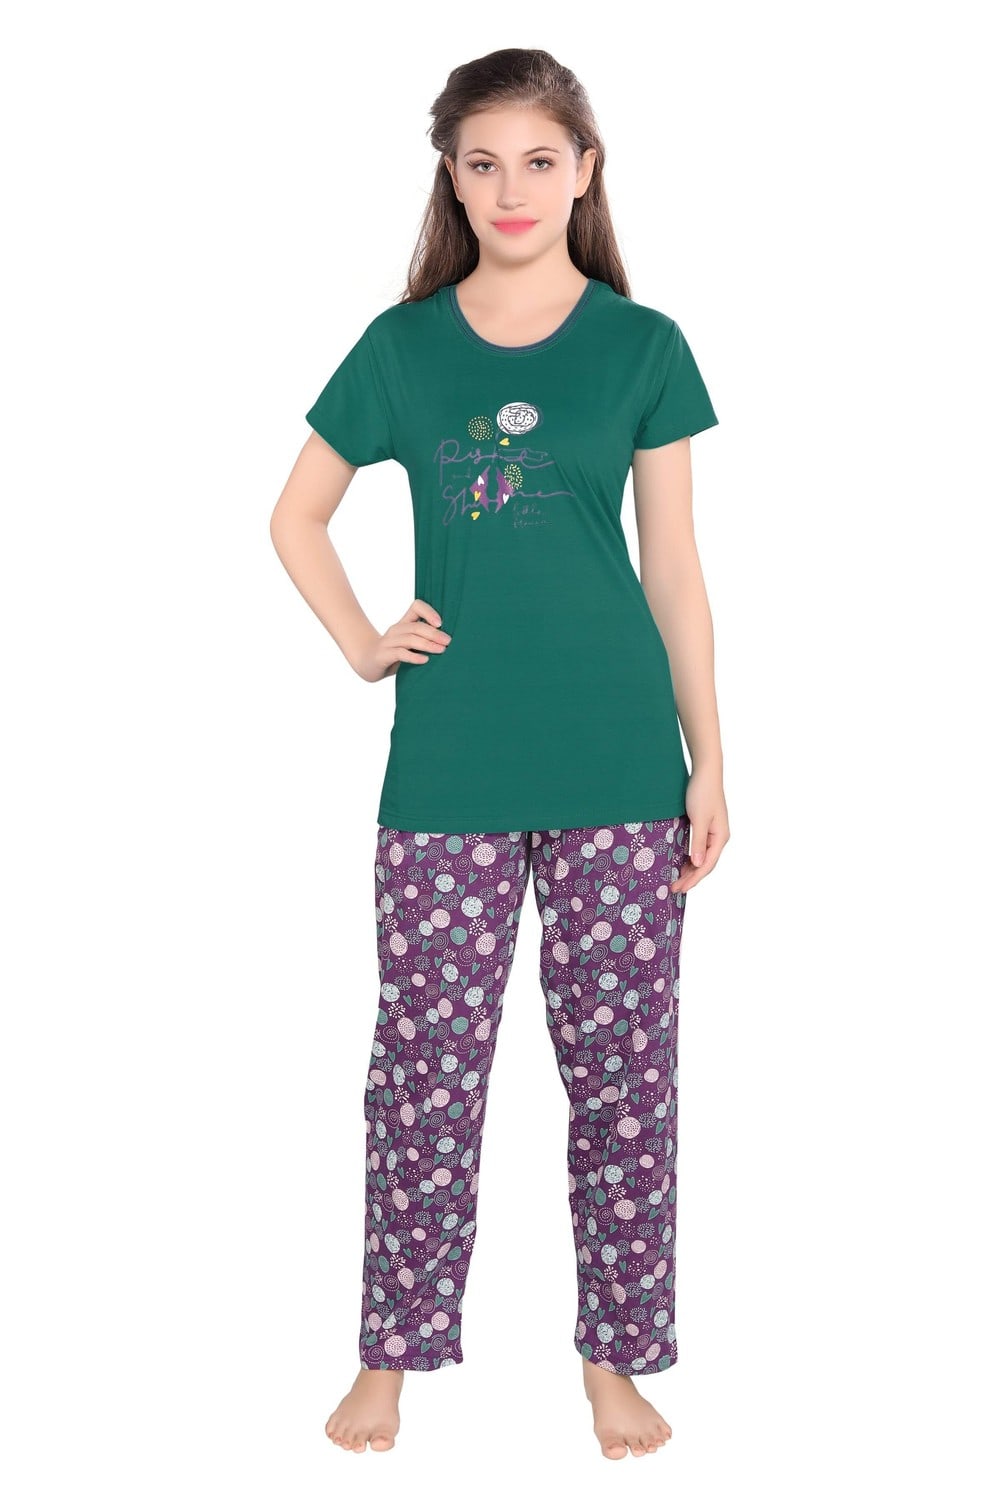 Pierre Donna Women's Cotton Pajama set With Pants - Women Sleepwear AVL - Dealz Souq